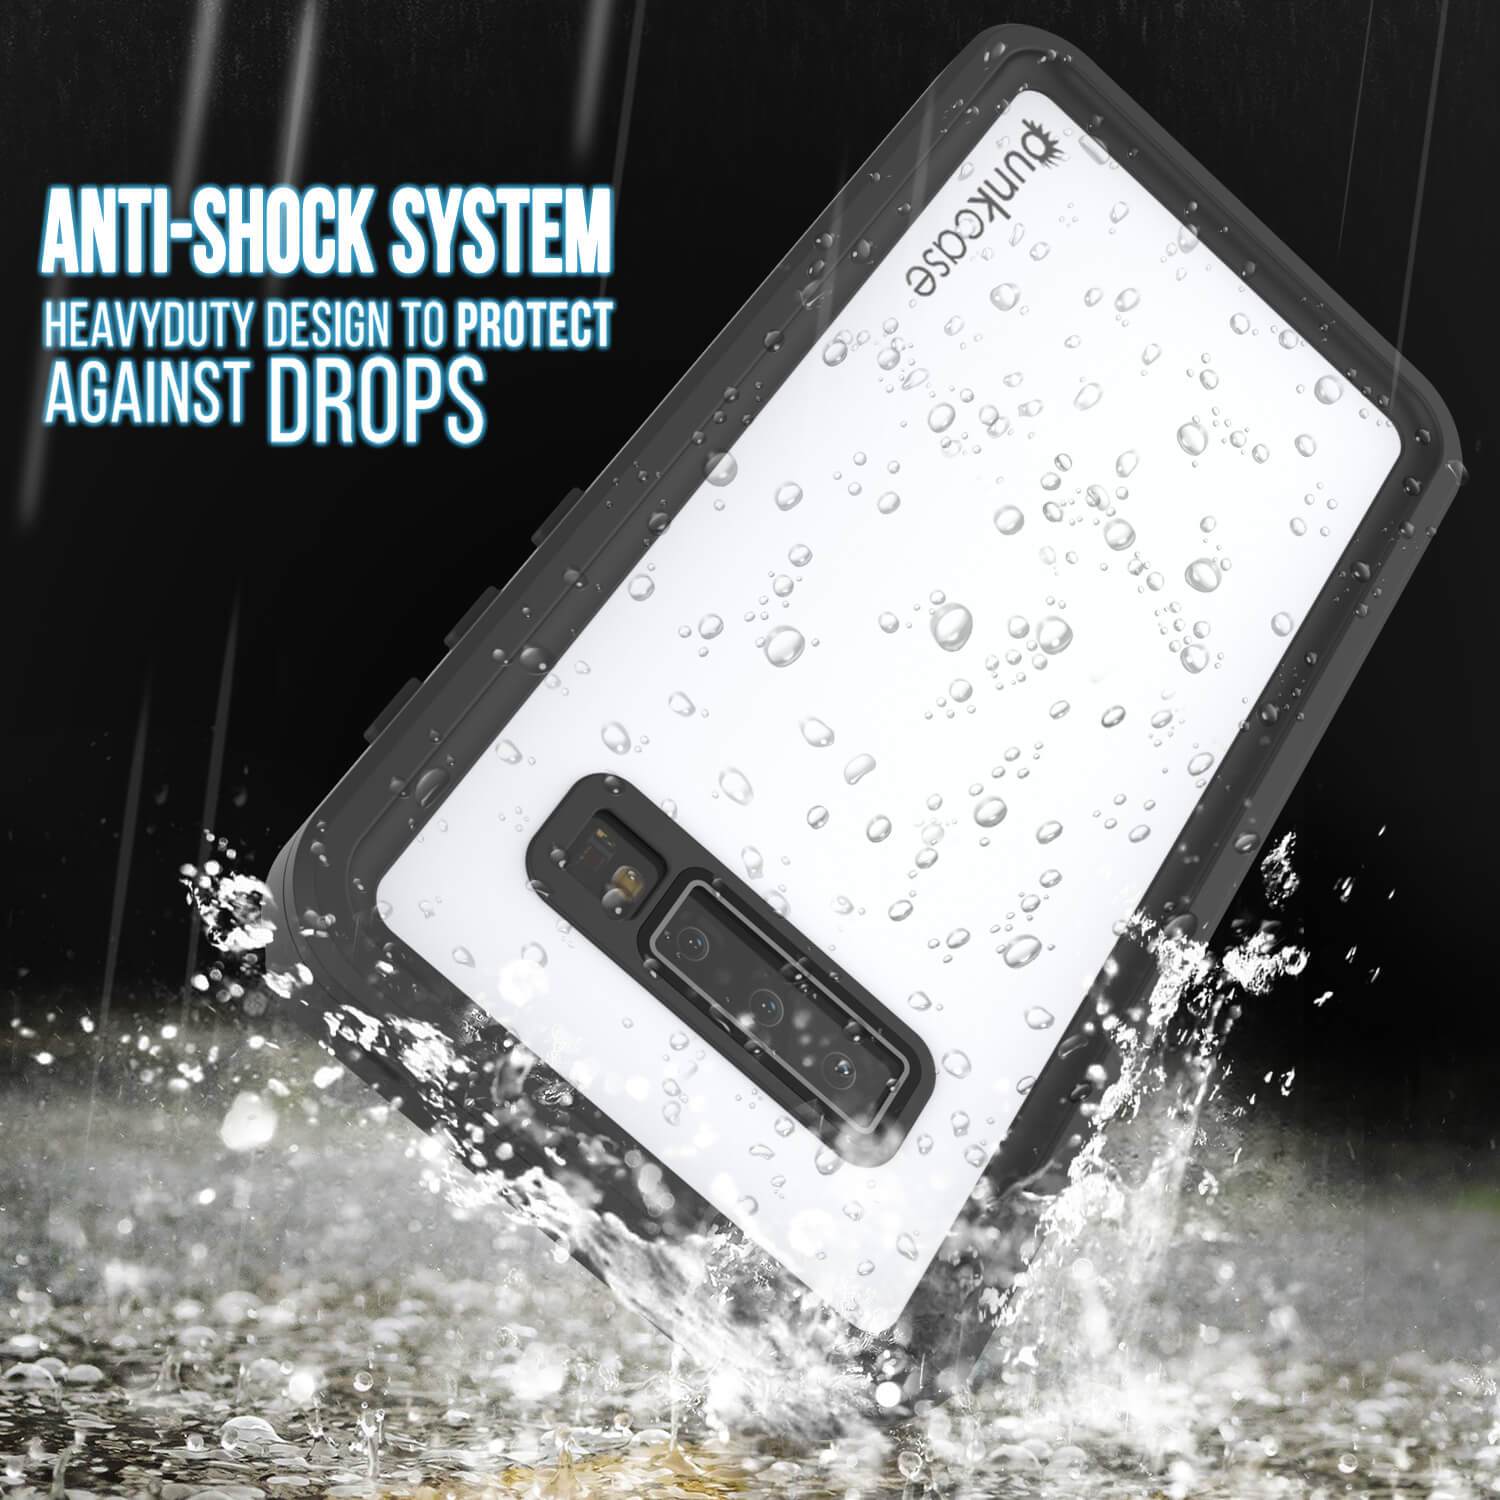 Galaxy S10 Waterproof Case, Punkcase StudStar White Thin 6.6ft Underwater IP68 Shock/Snow Proof